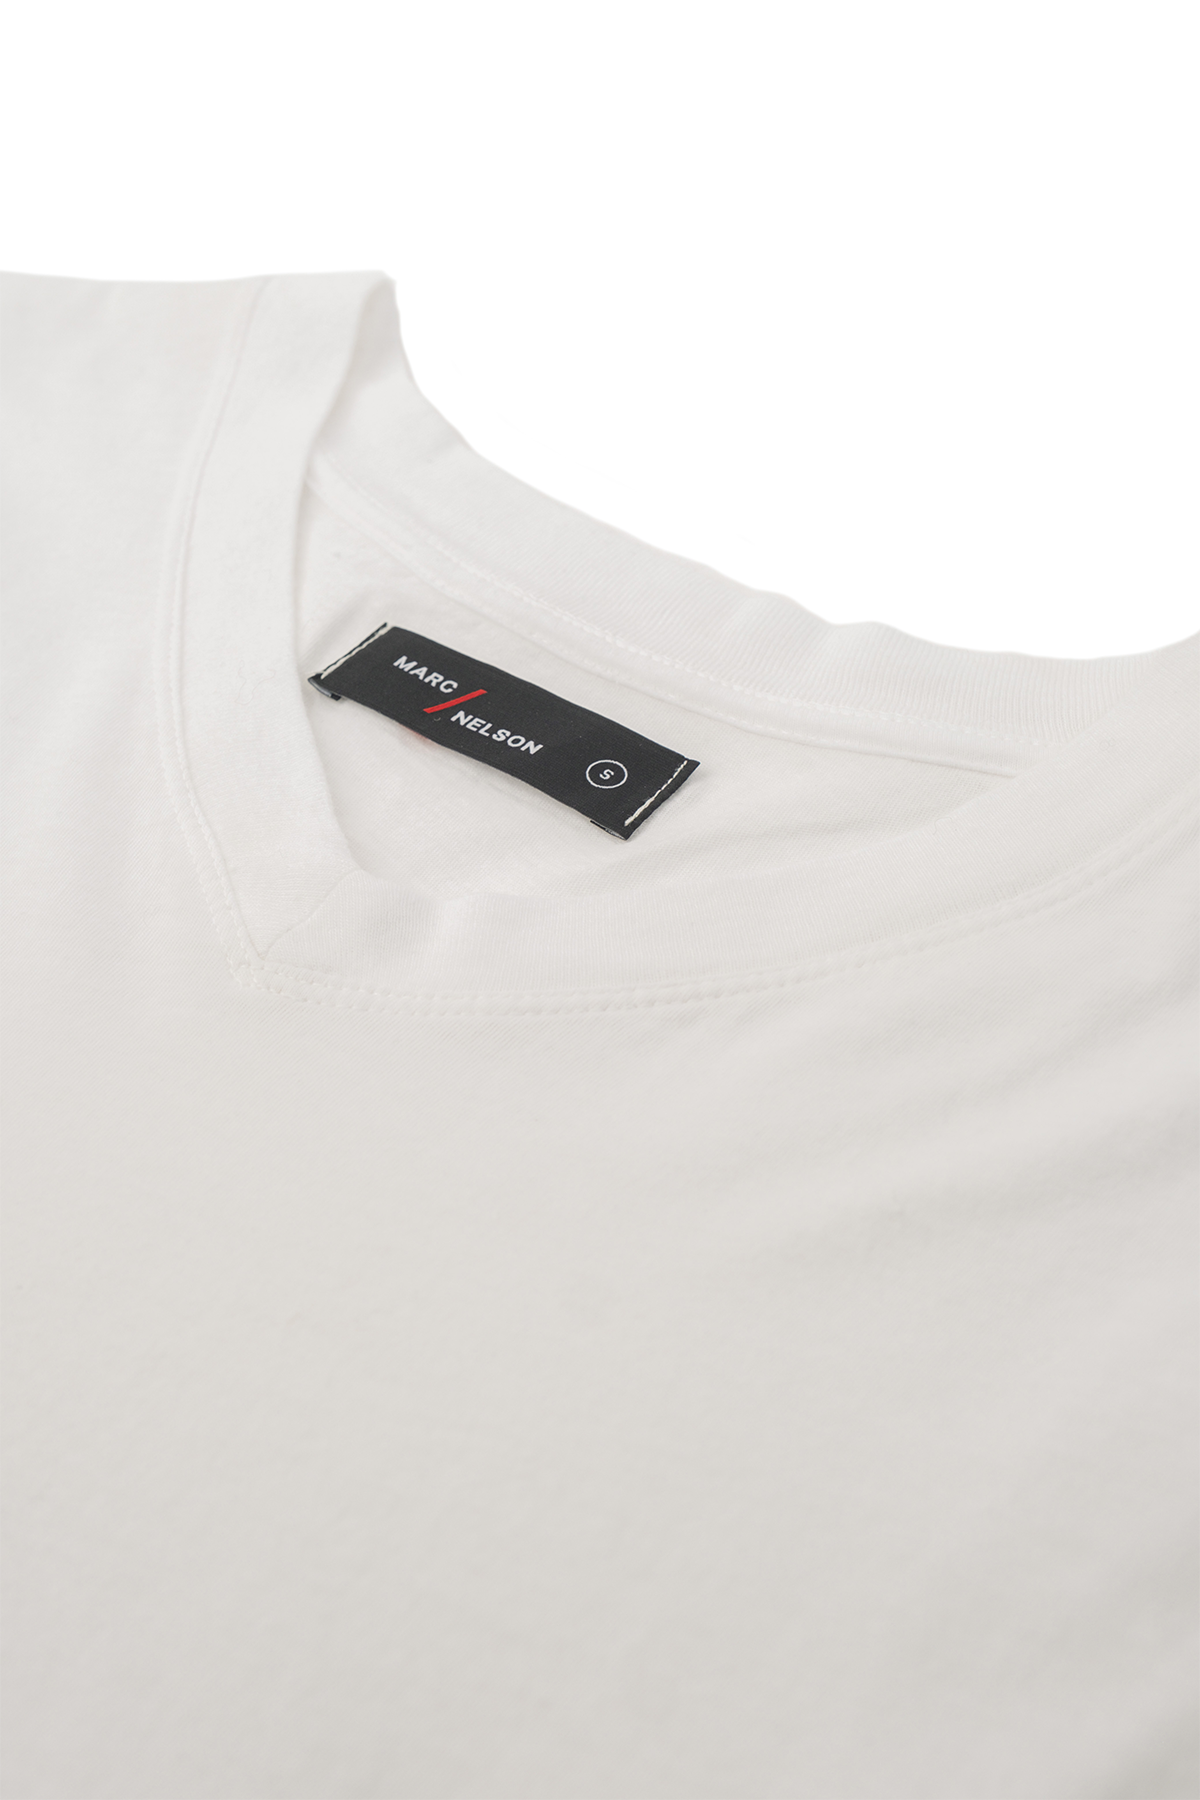 Close up of white Cotton Long Sleeve V-Neck T-Shirt